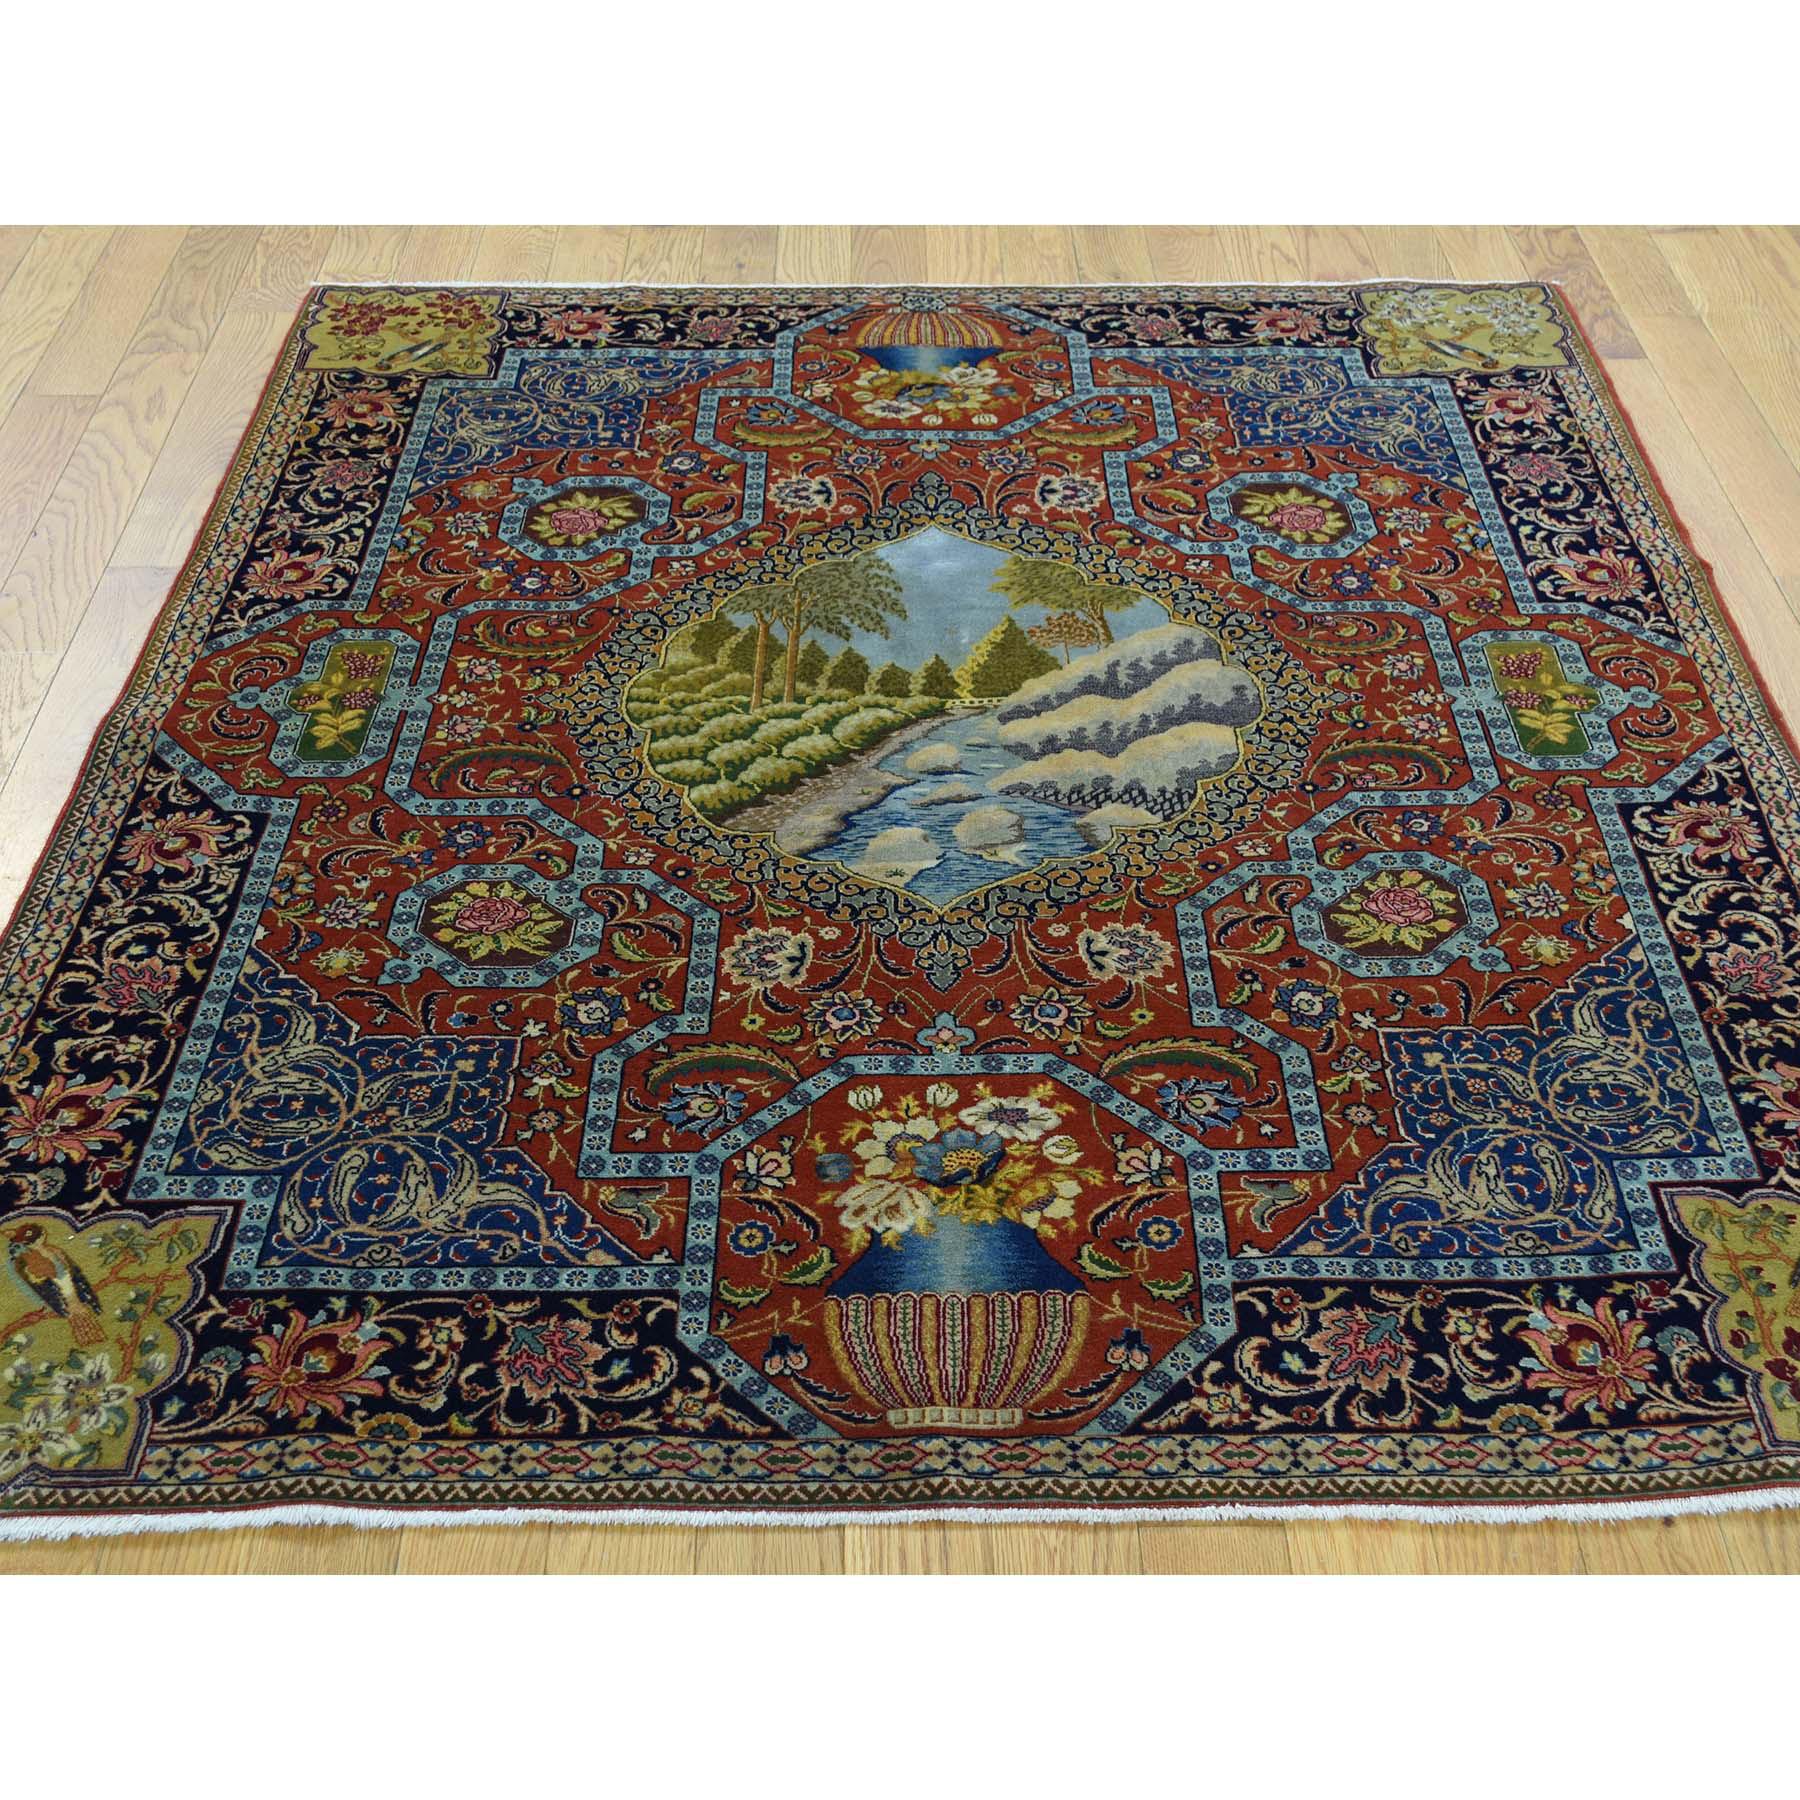 Antique Persian Tabriz pictorial mint condition oriental rug

Measures: 4'7